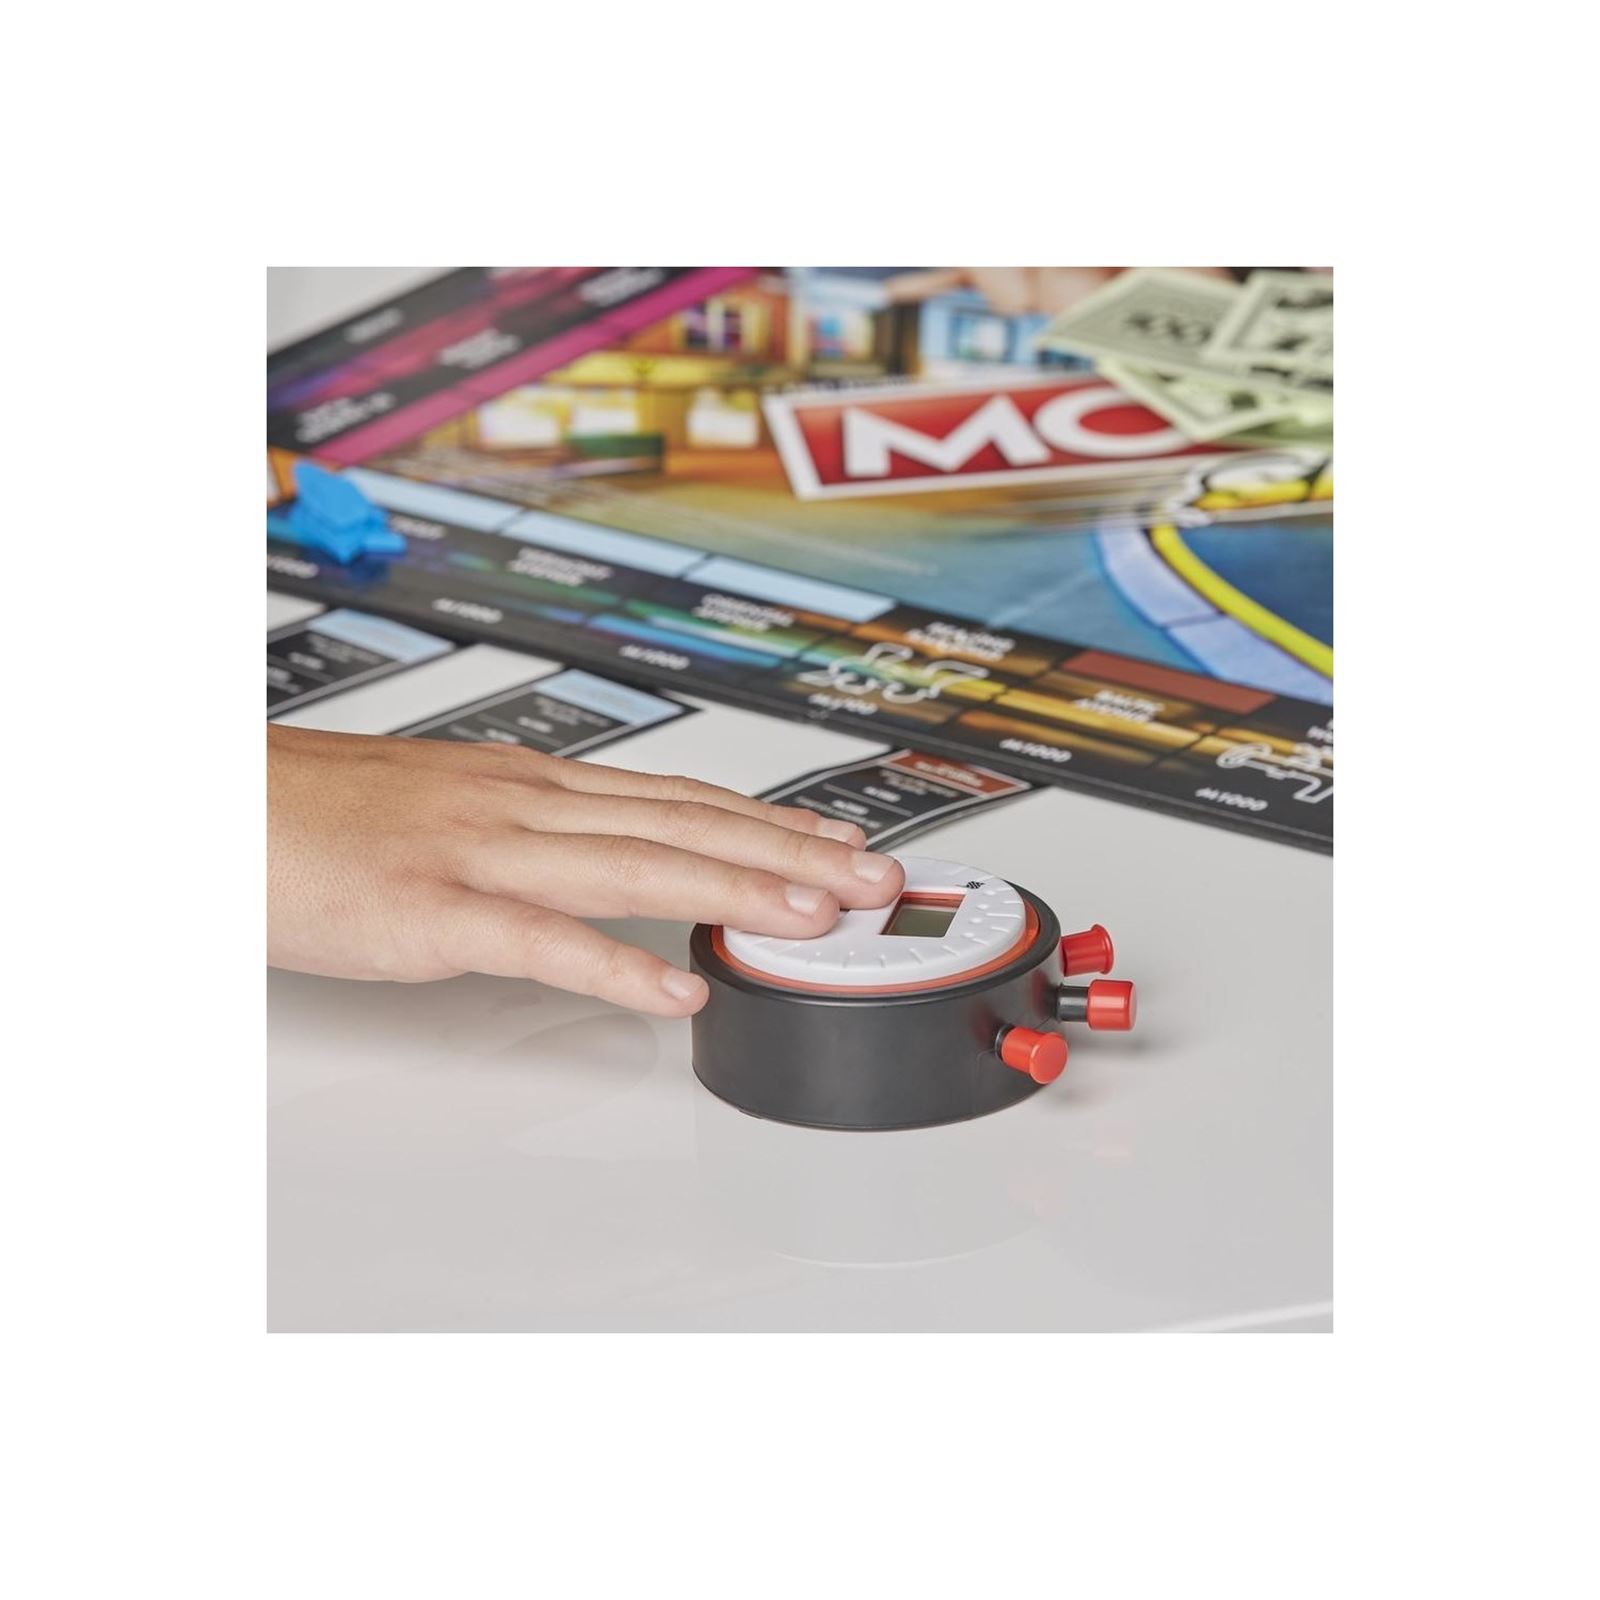 Hasbro Monopoly Speed - HAS-E7033 